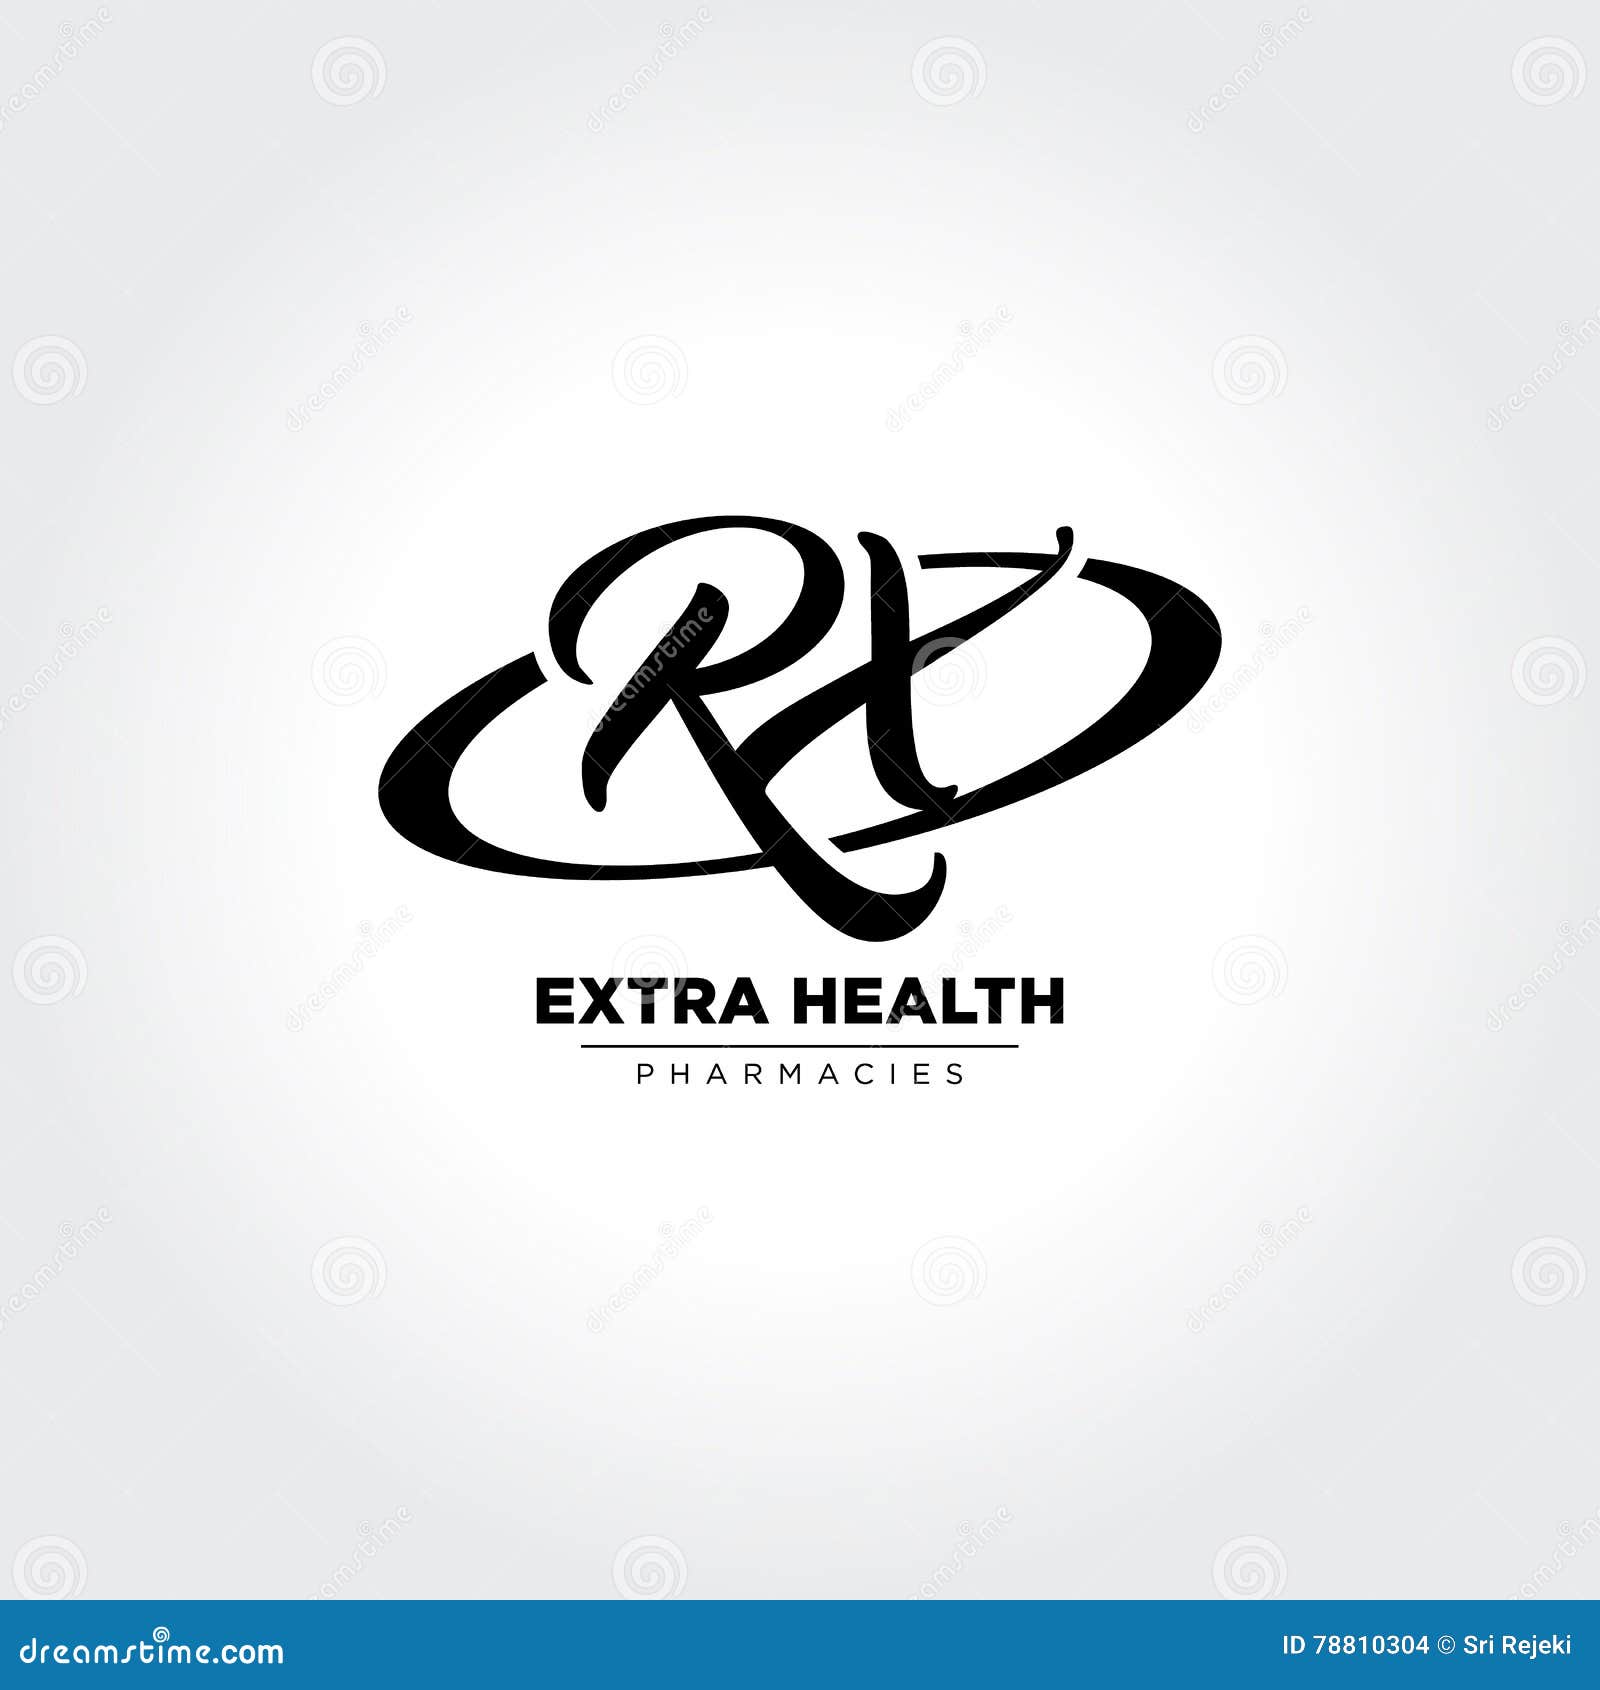 Rx Initial Symbol In Circle Creative Pharmaceutical Design